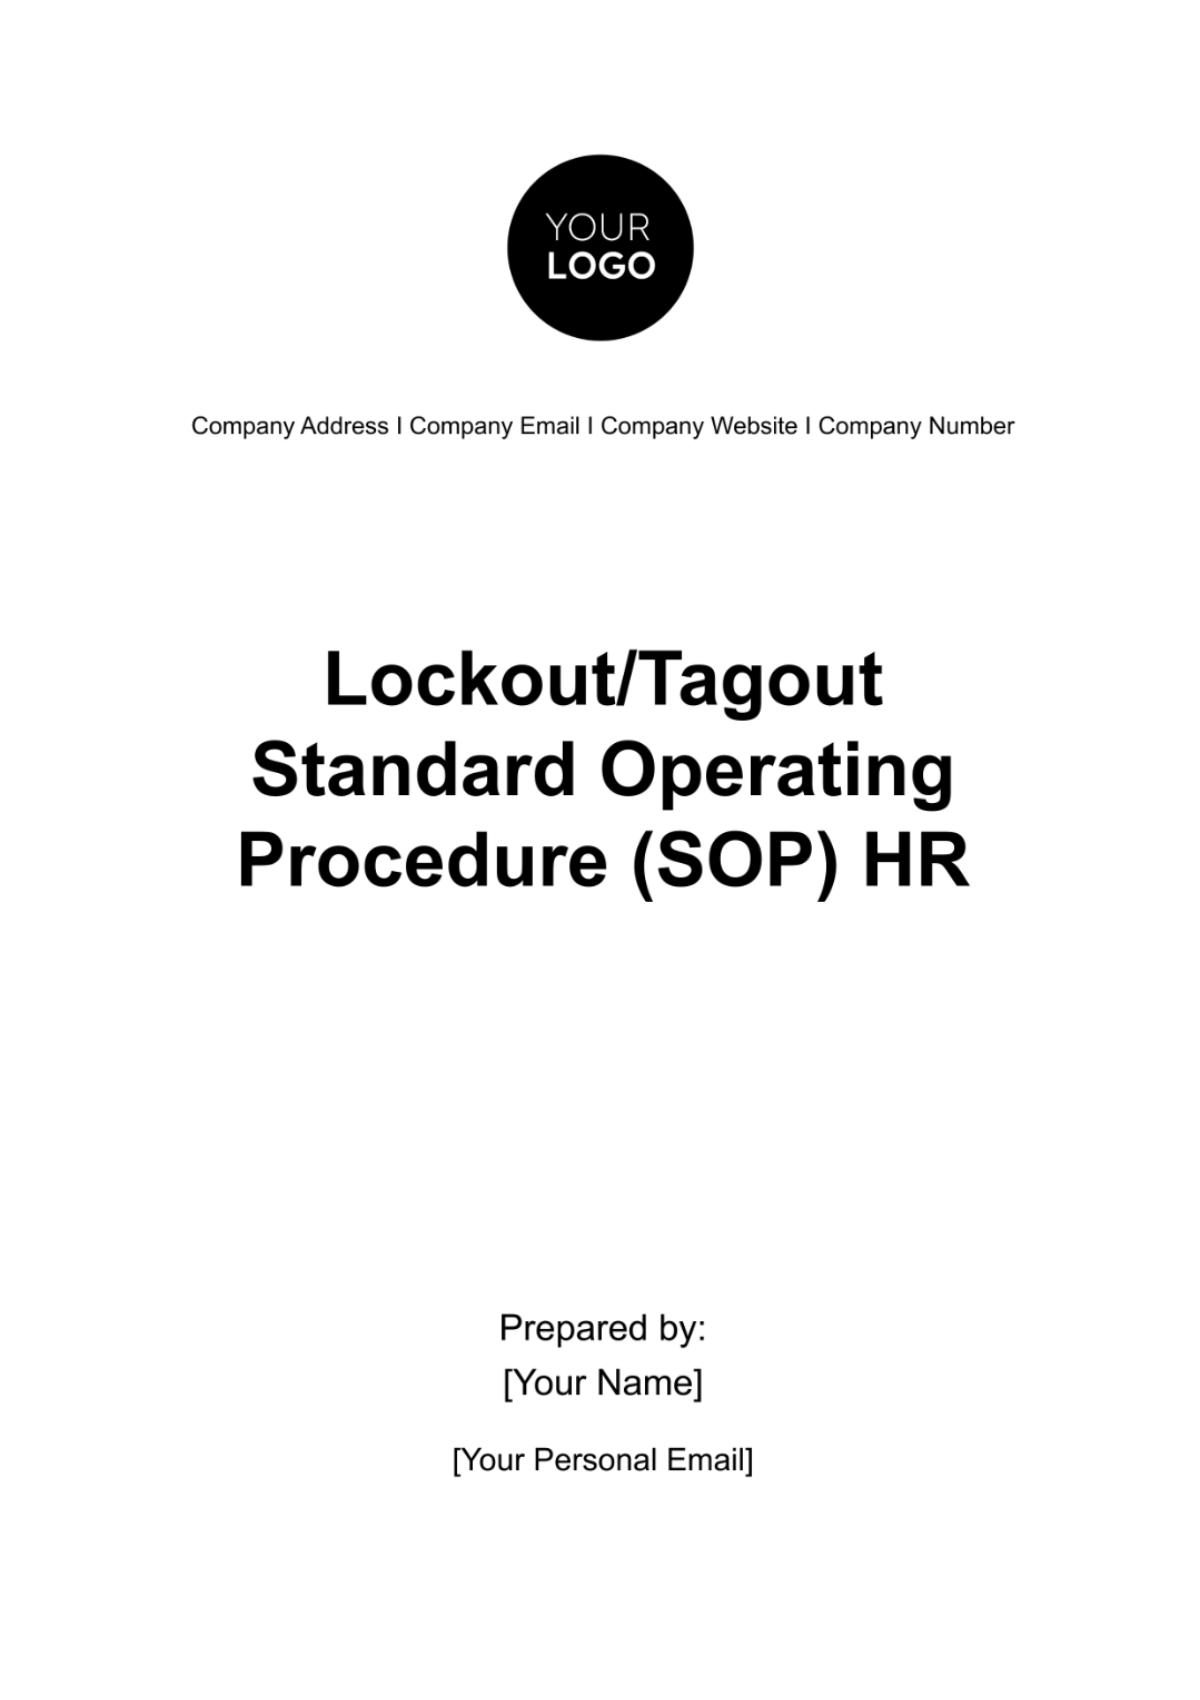 Lockout/Tagout Standard Operating Procedure (SOP) HR Template